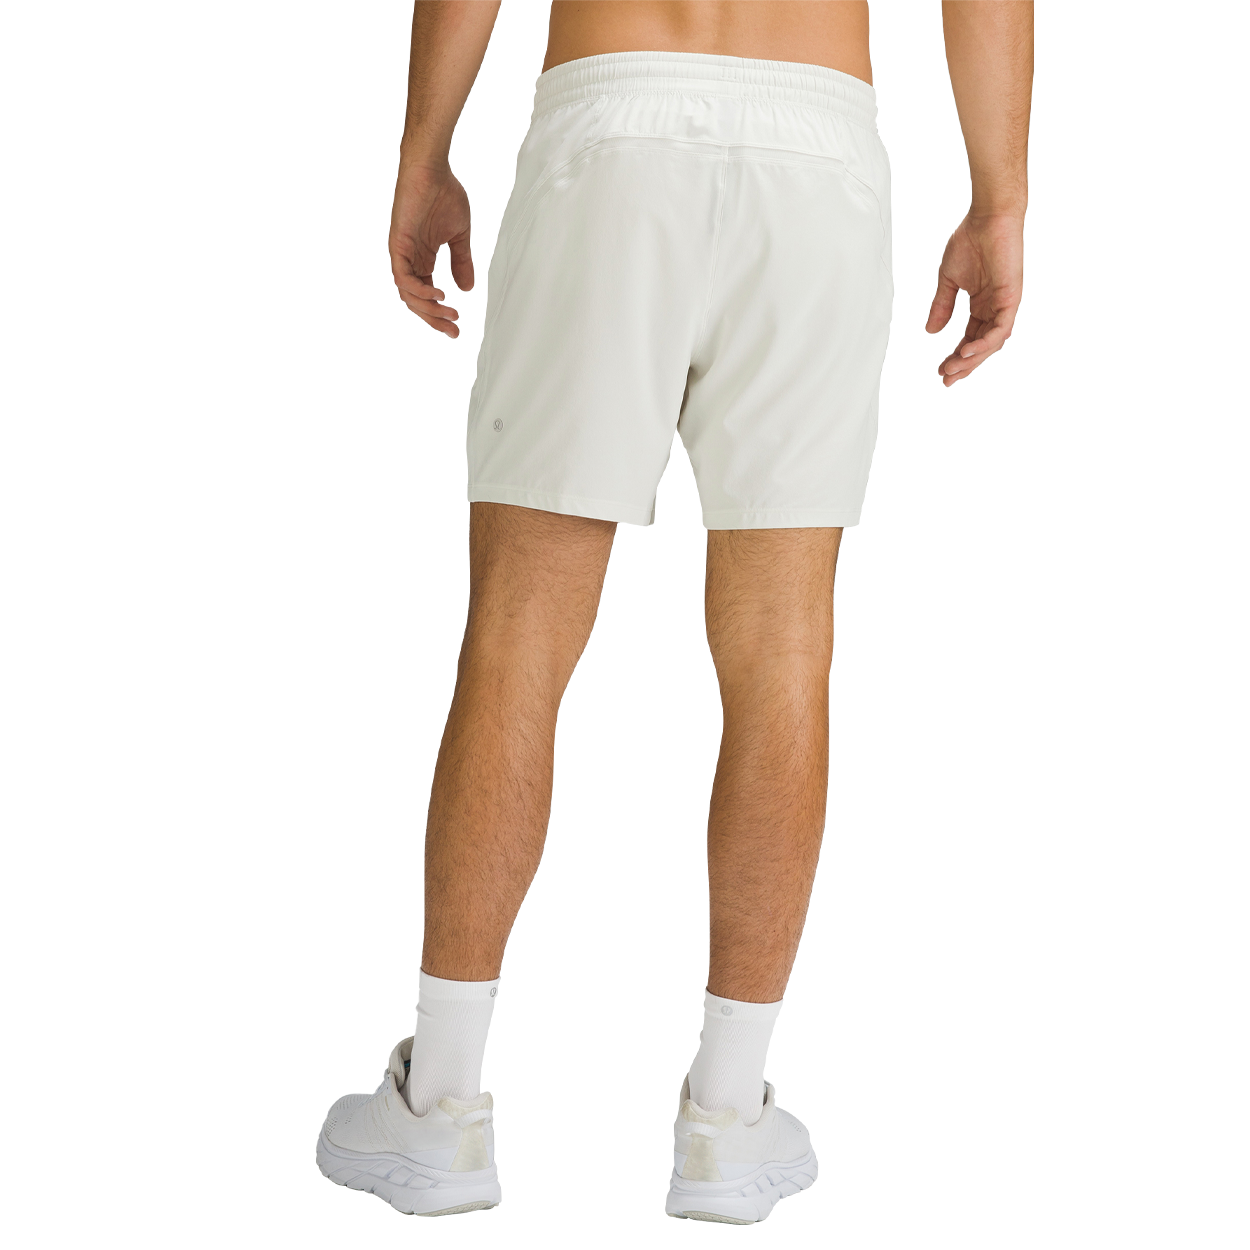 Lululemon Pace Breaker Shorts with White Liner 9 - Depop